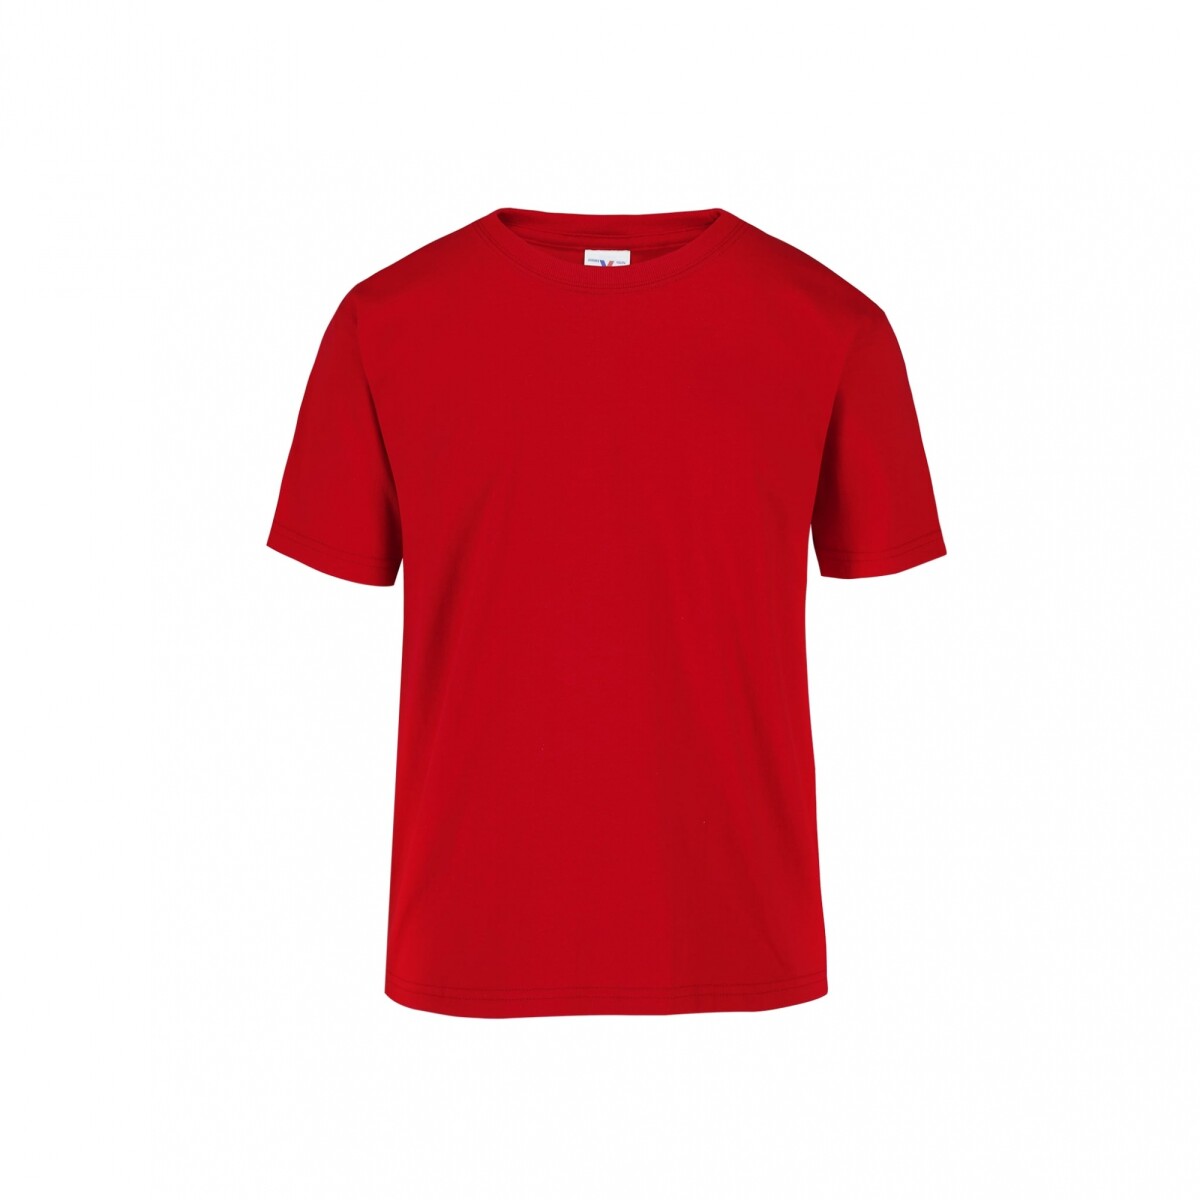 Camiseta a la base joven - Rojo 